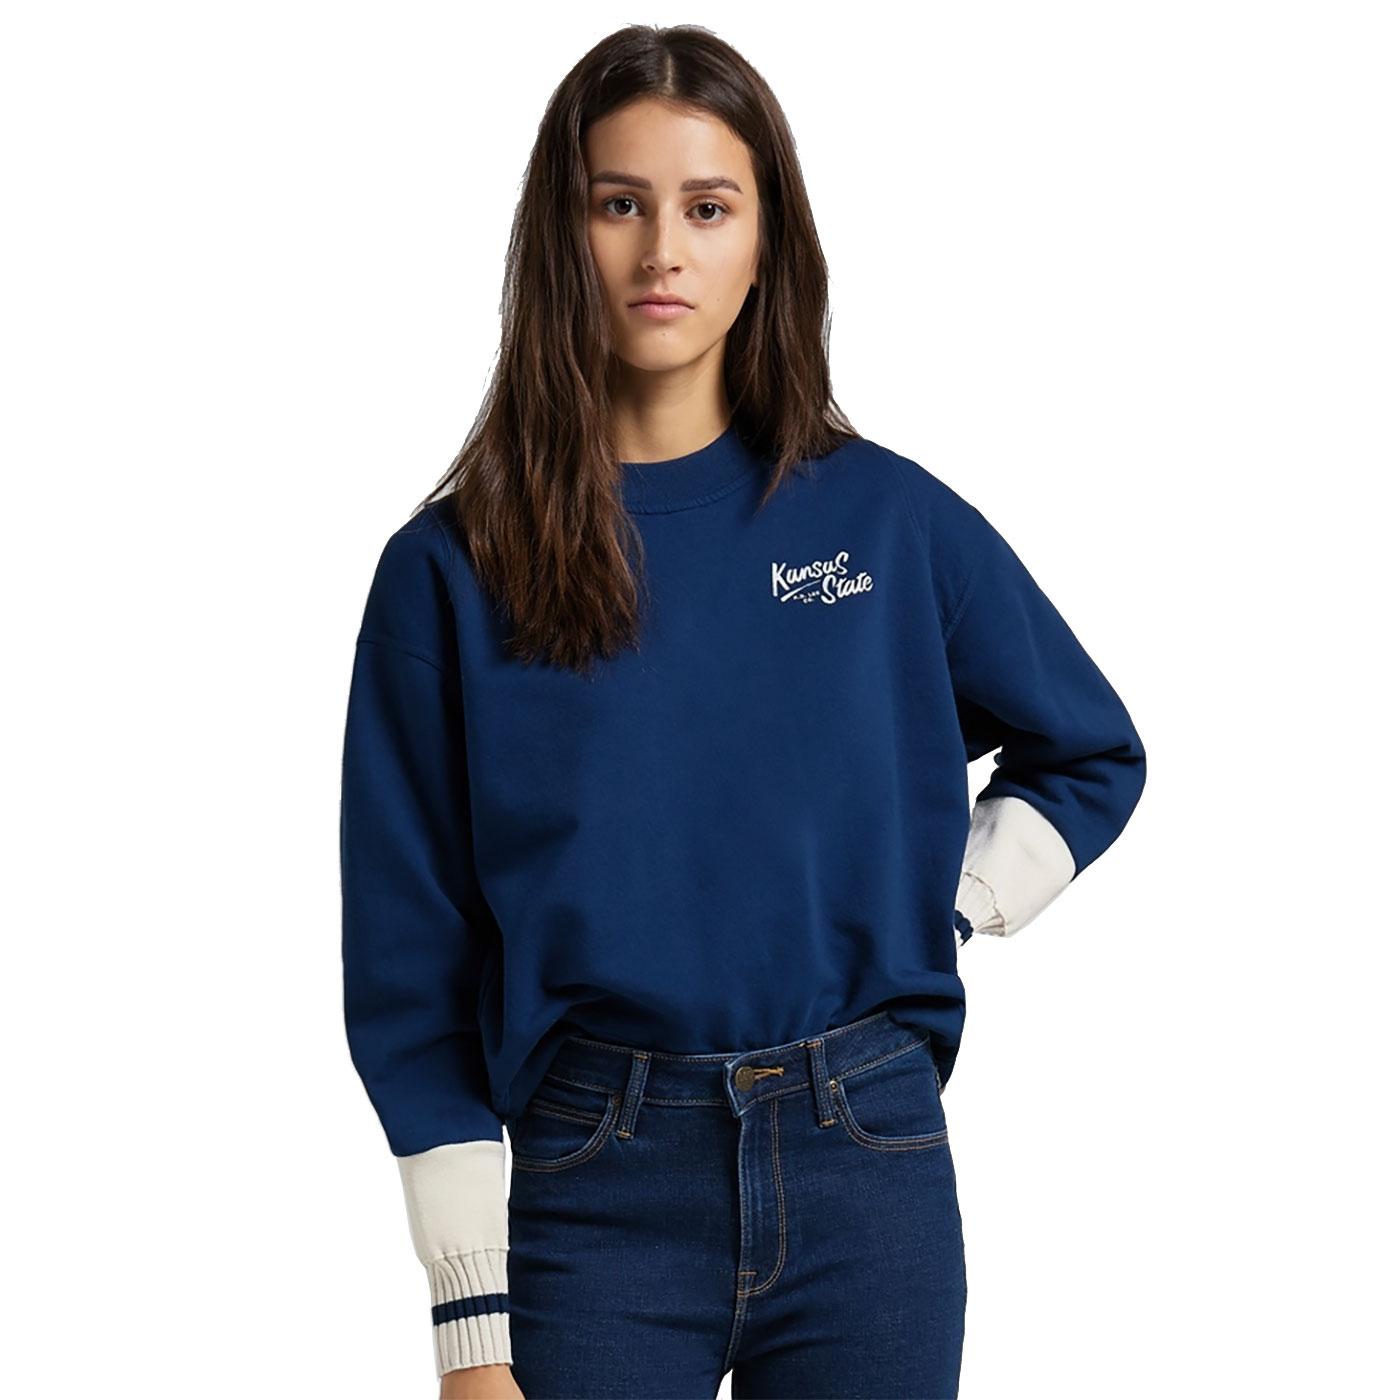 LEE Womens Cut & Sew Raglan Sweatshirt in Washed Blue